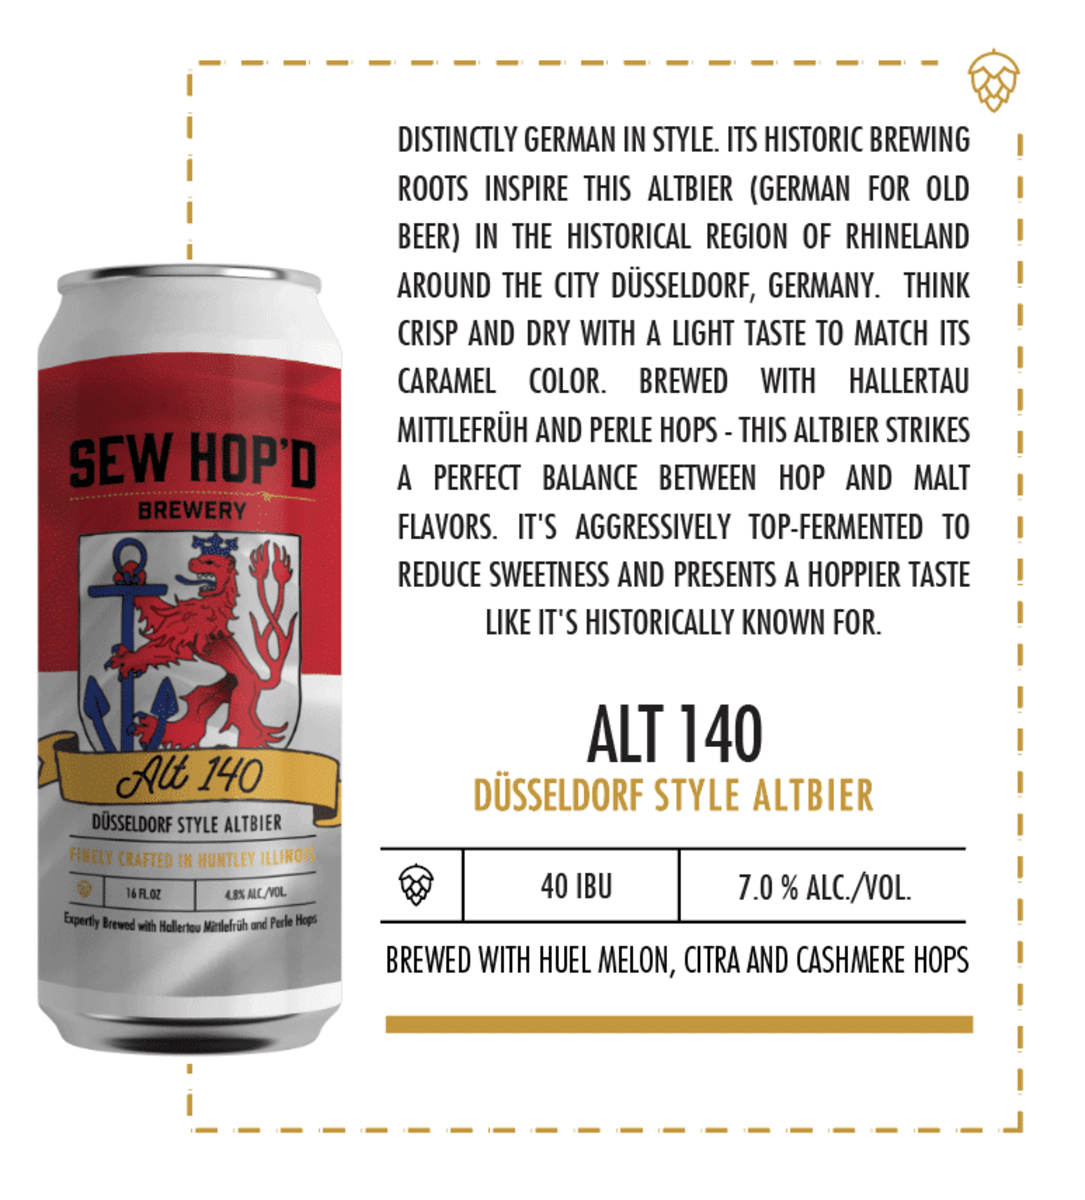 Illinois' breweries Sew Hop'd